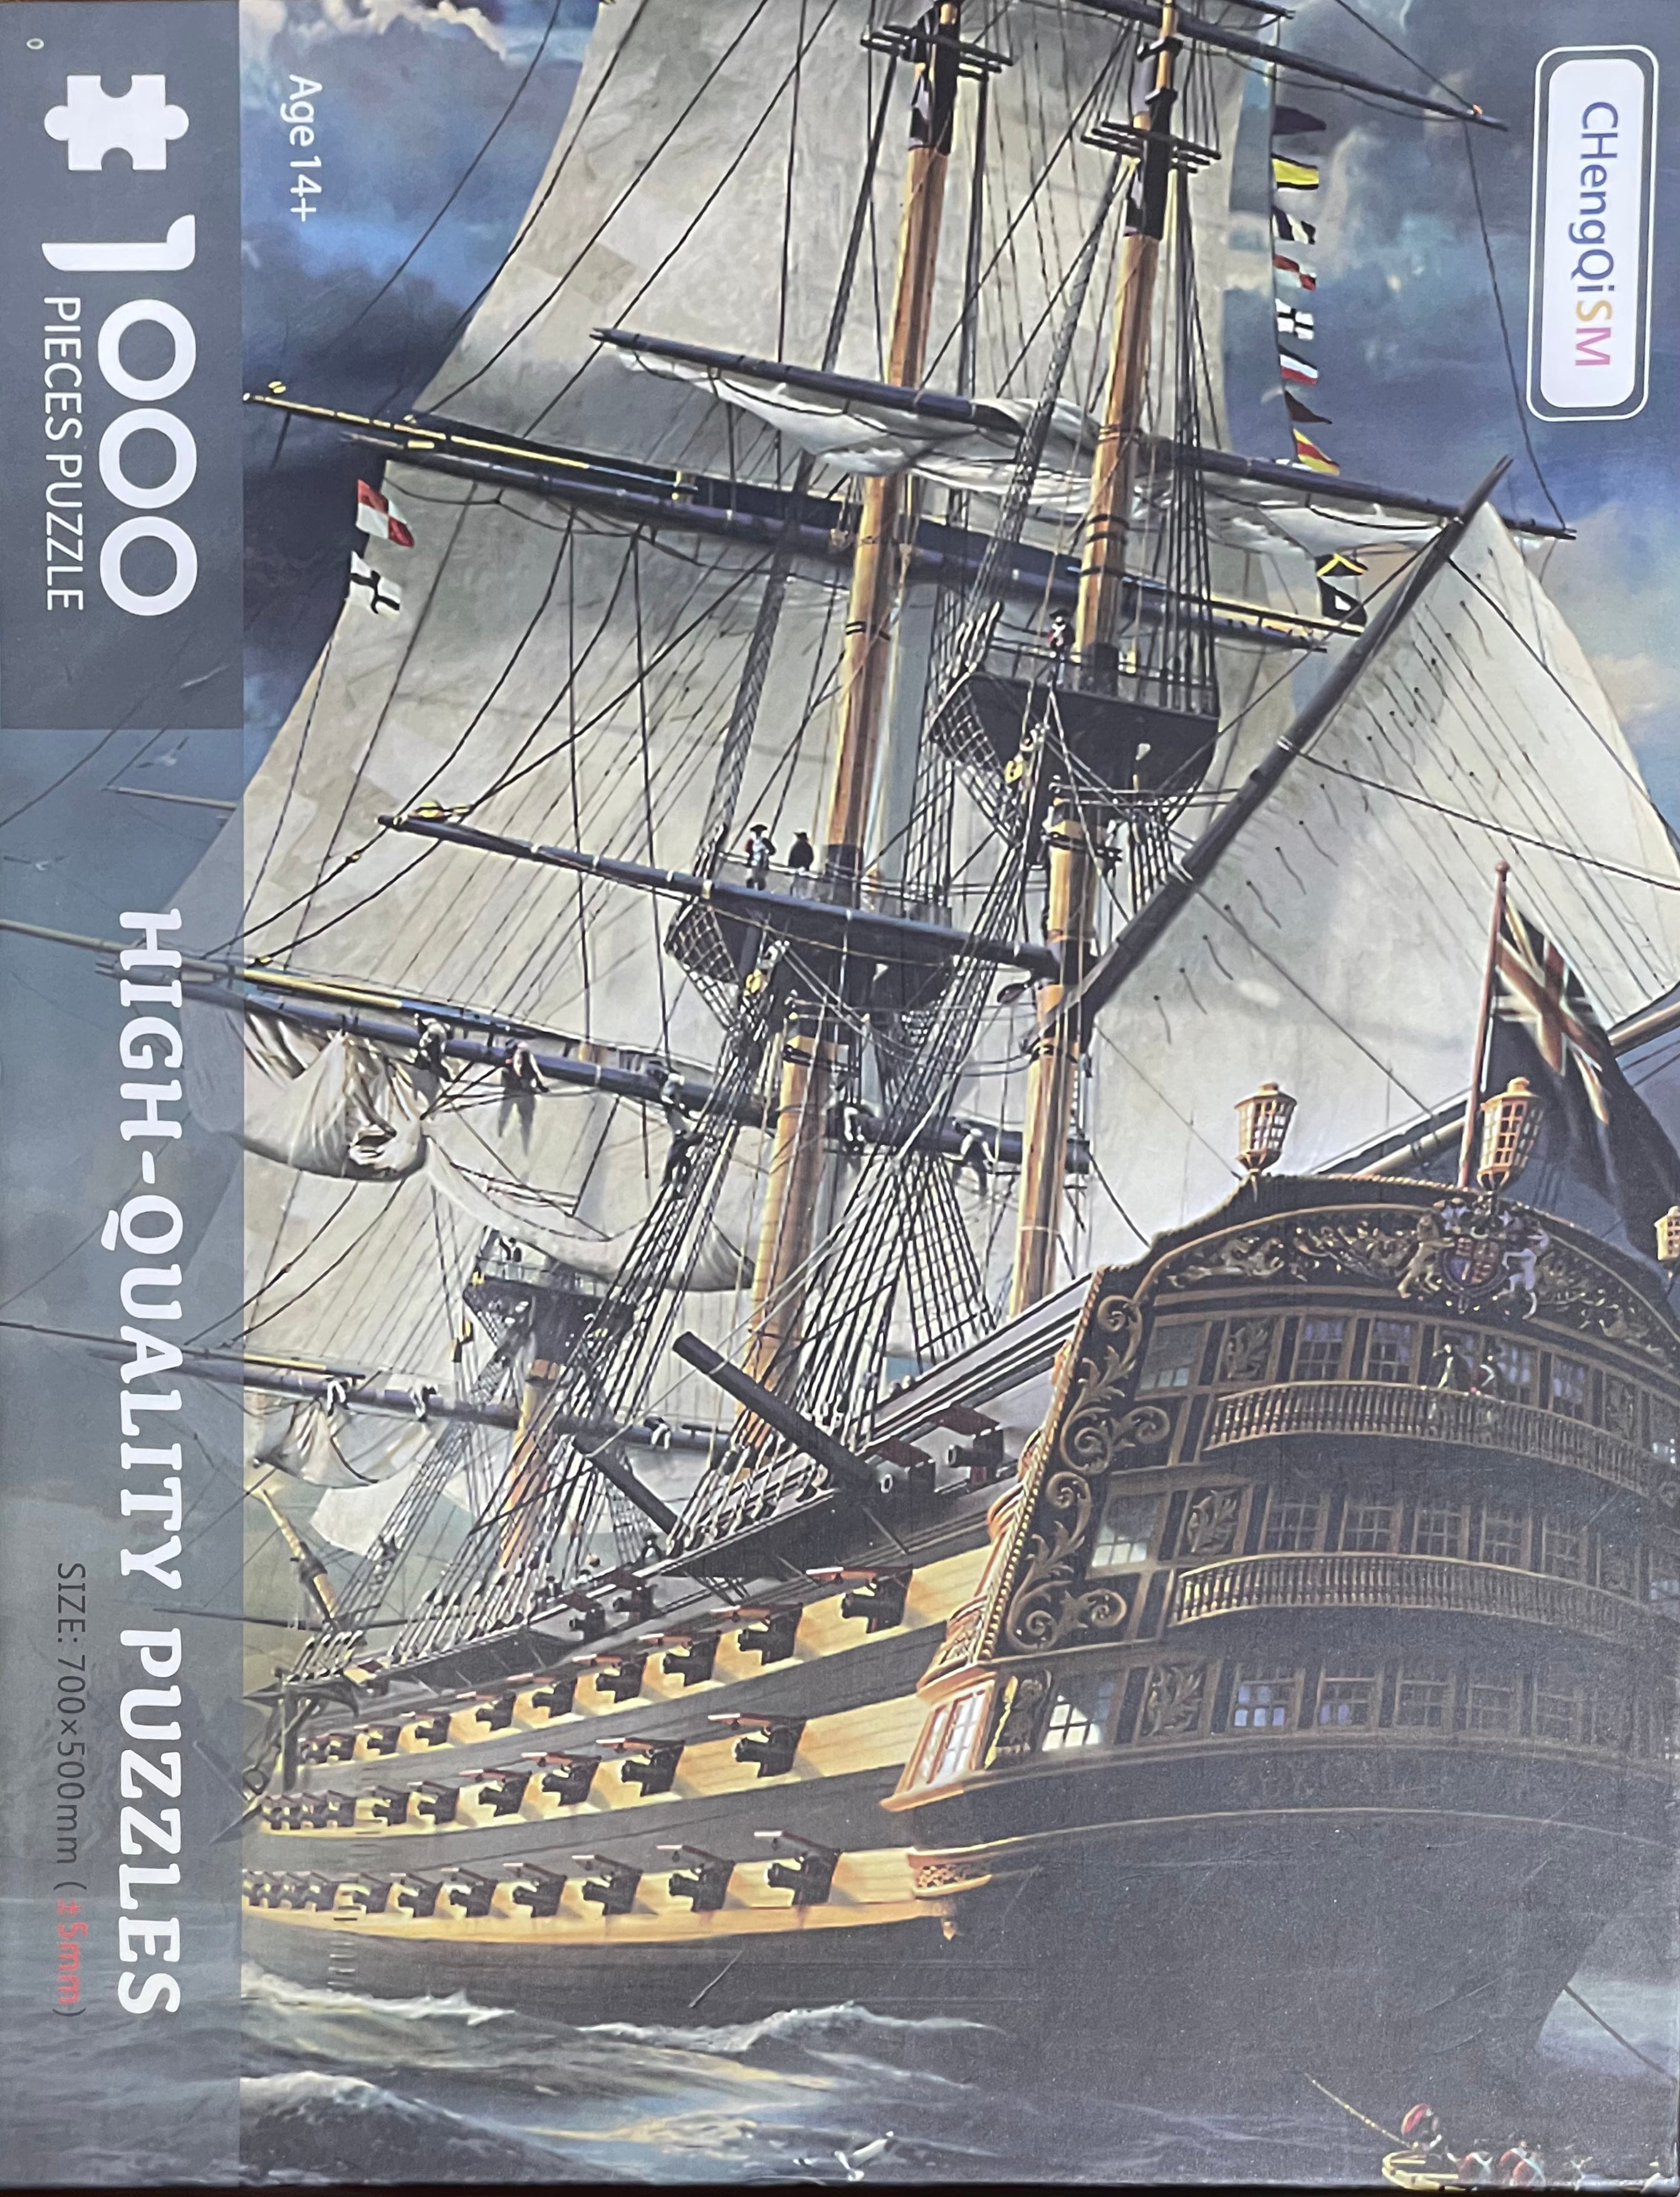 Rental -  Jigsaw Puzzle - Excalibur - 3 Masted British Empire Sailing Fortress